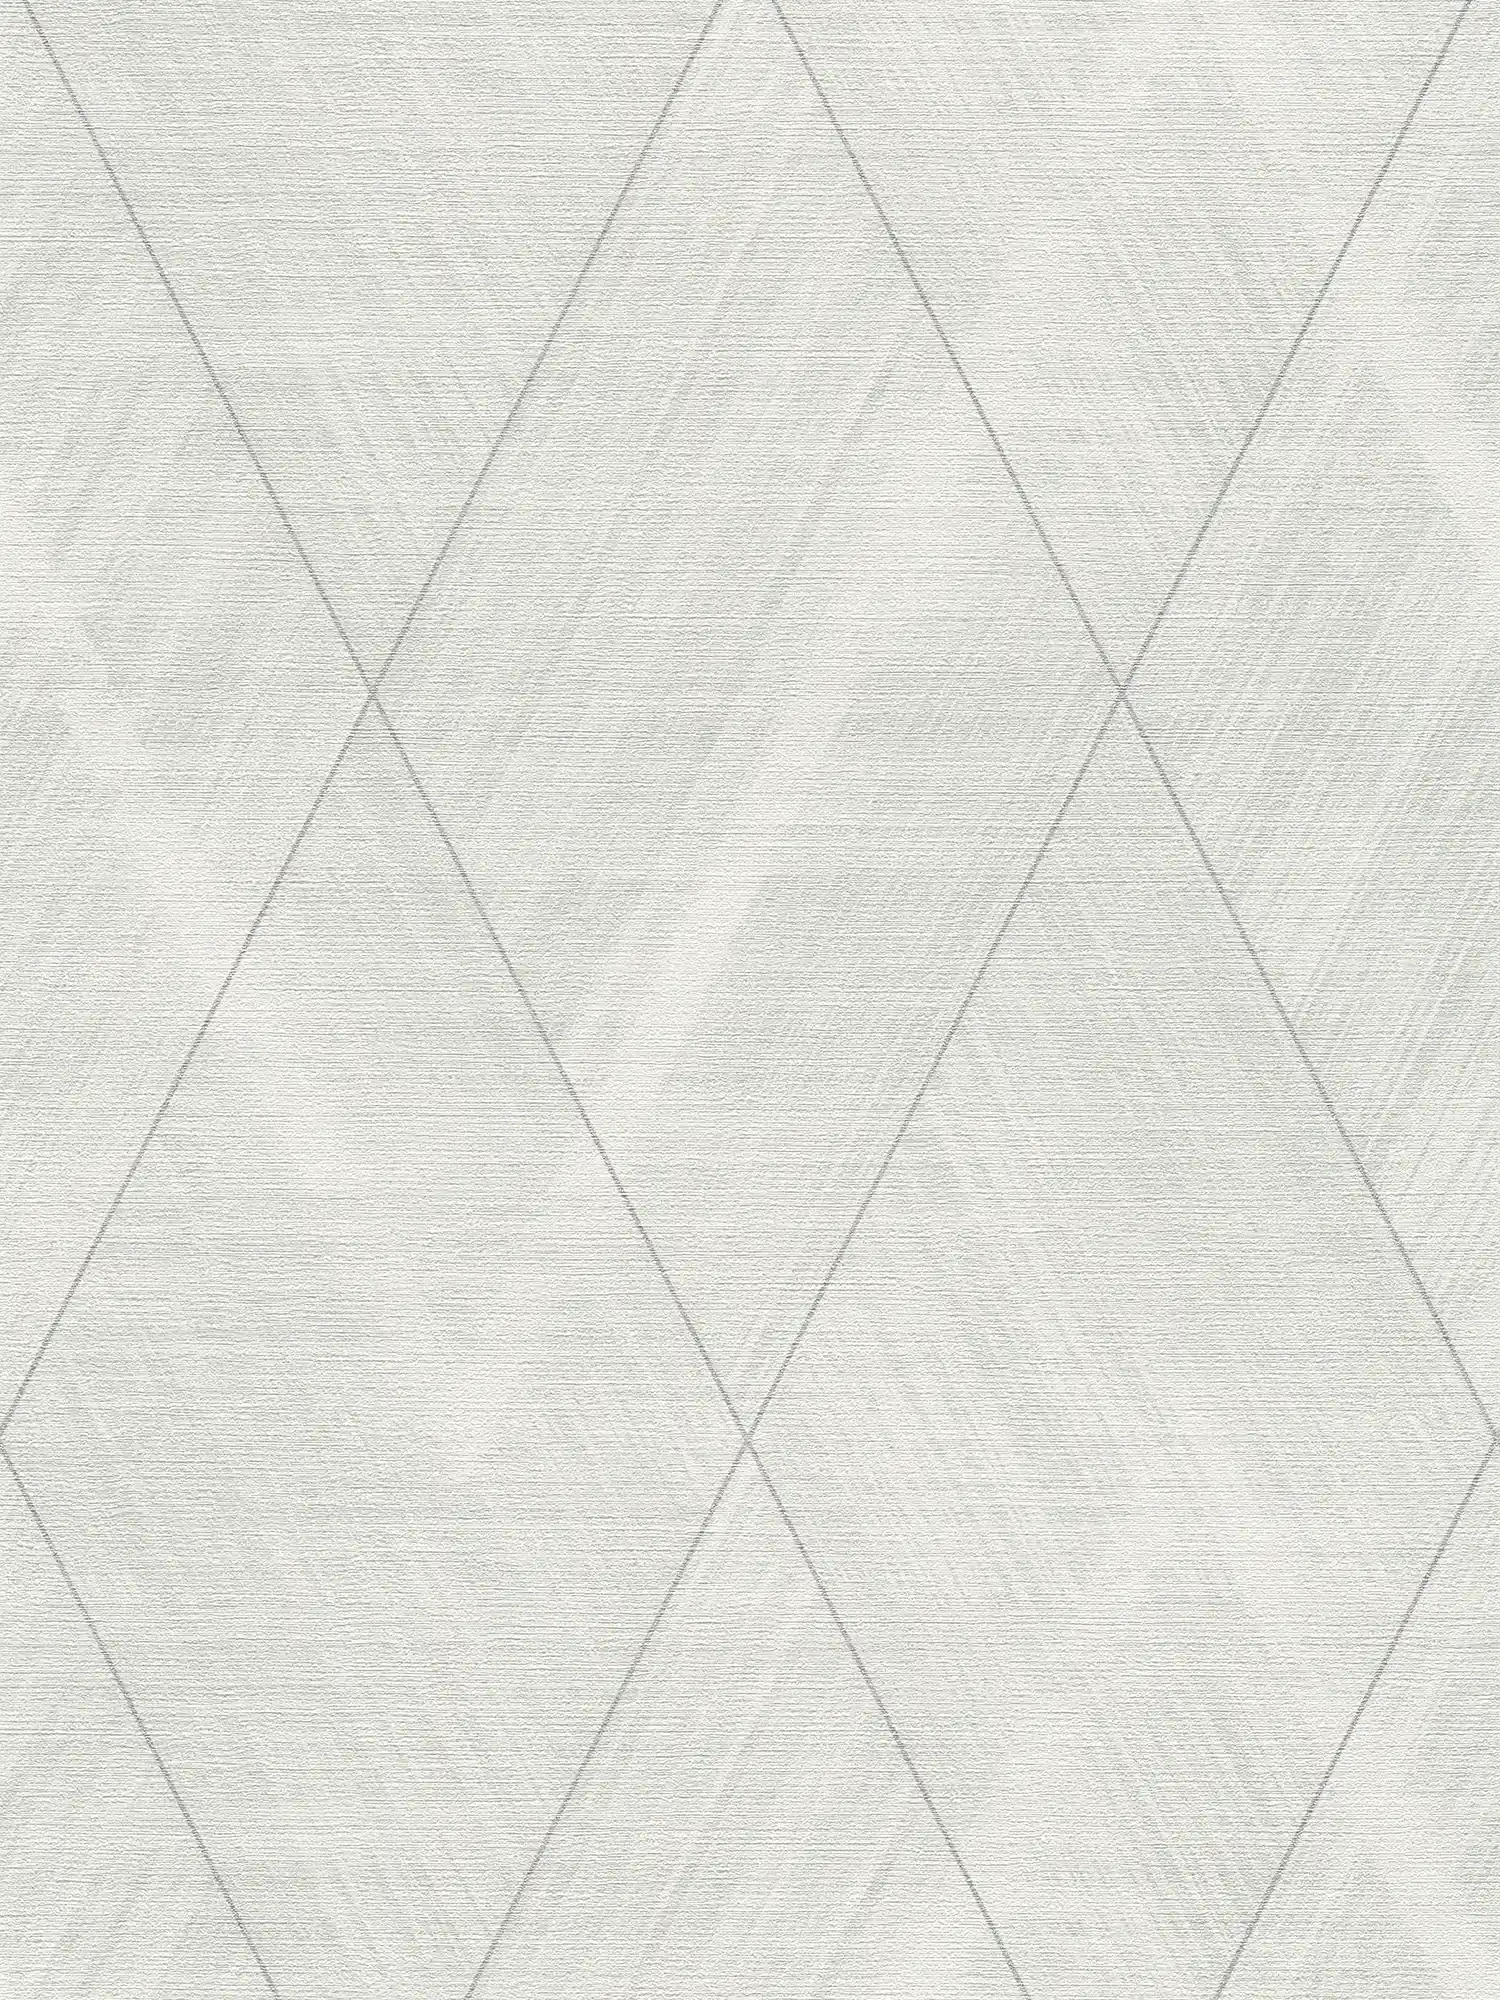         Textiloptik Tapete mit Rauten Muster – Metallic, Weiß
    